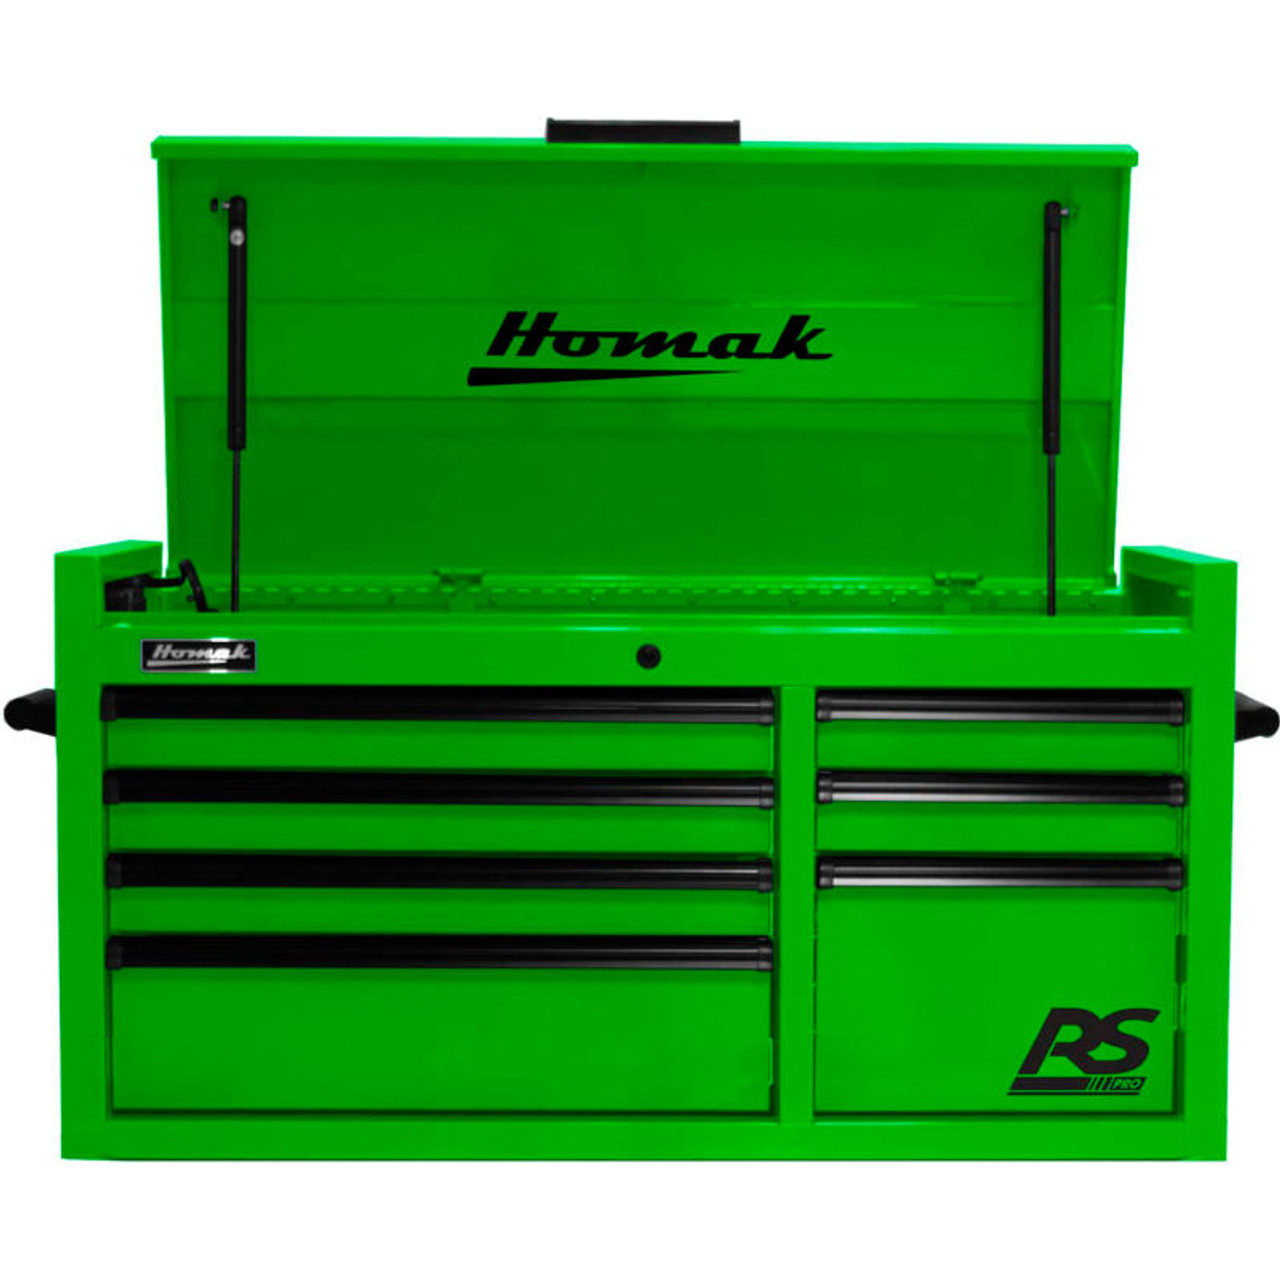 Homak LG02004173 RS Pro Series 40.5 X 23.5 X 21.37 -7 Drawer